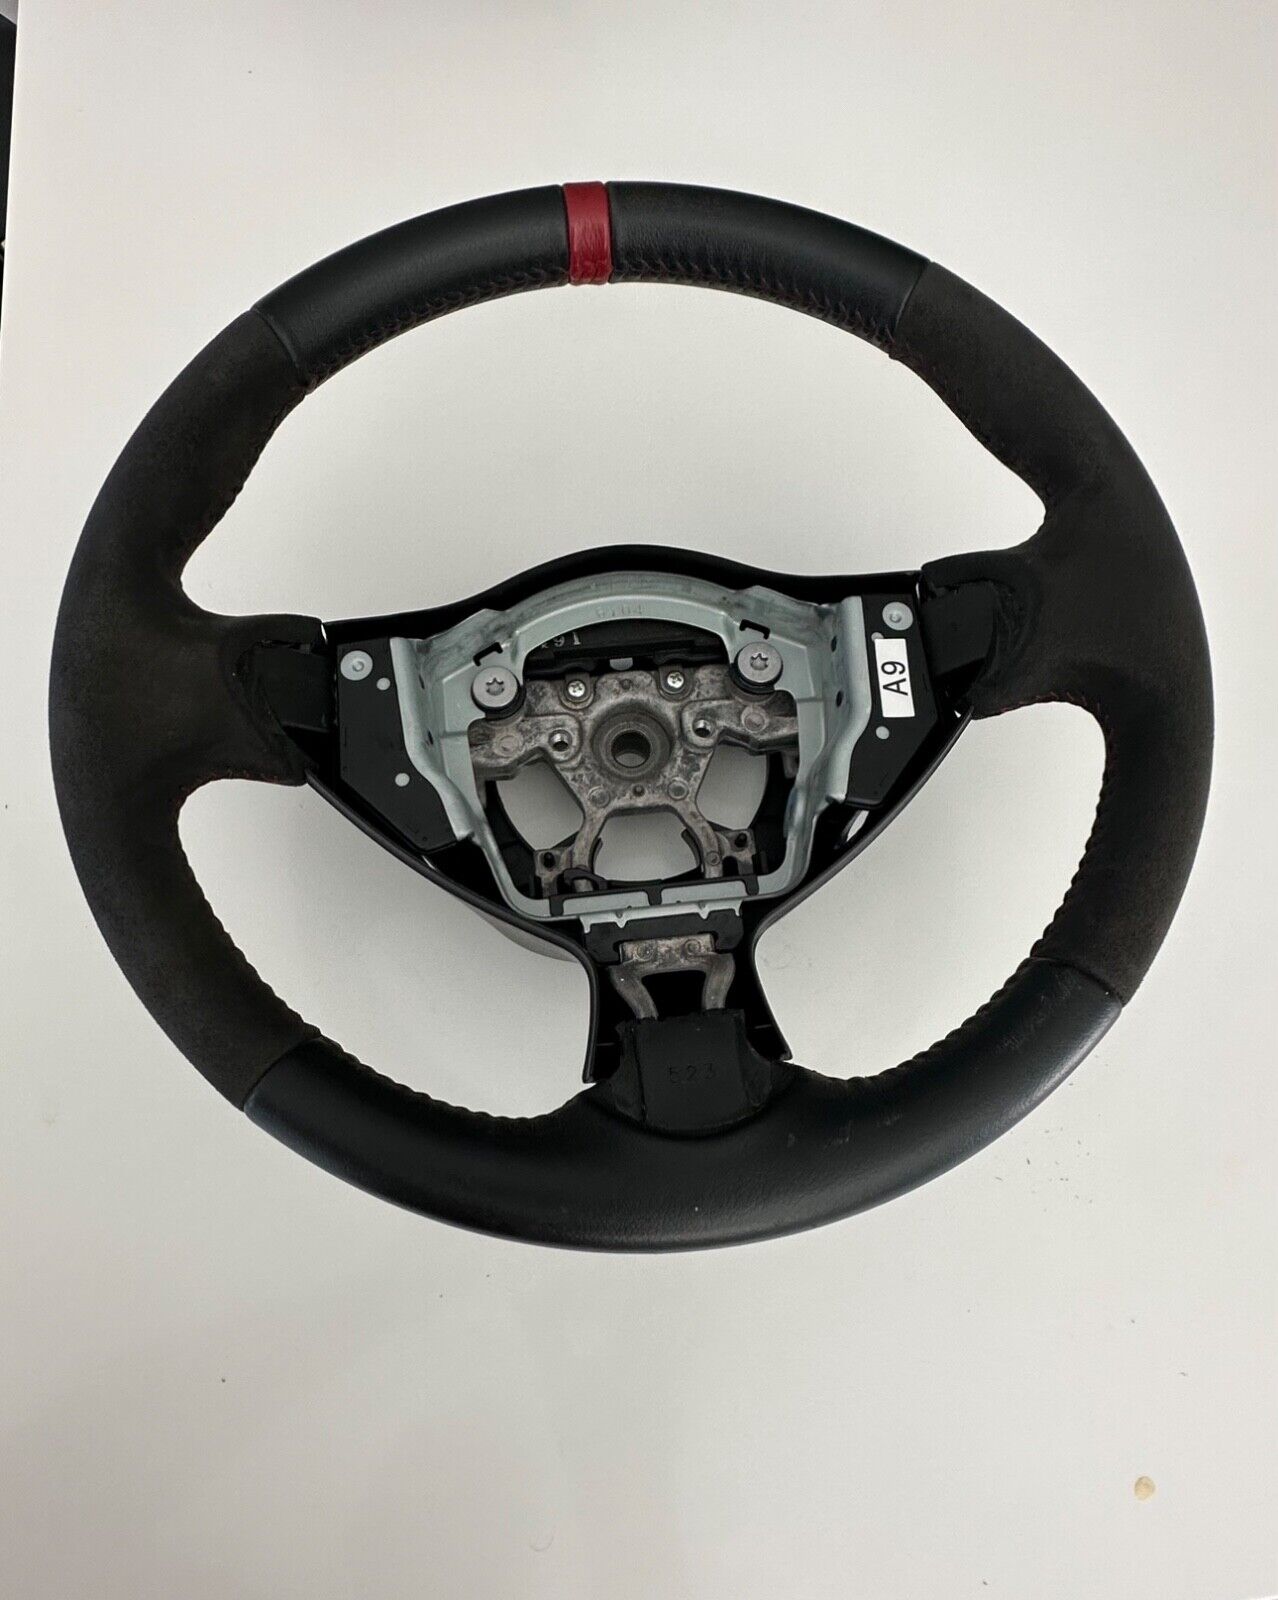 2017 370z nismo steering wheel